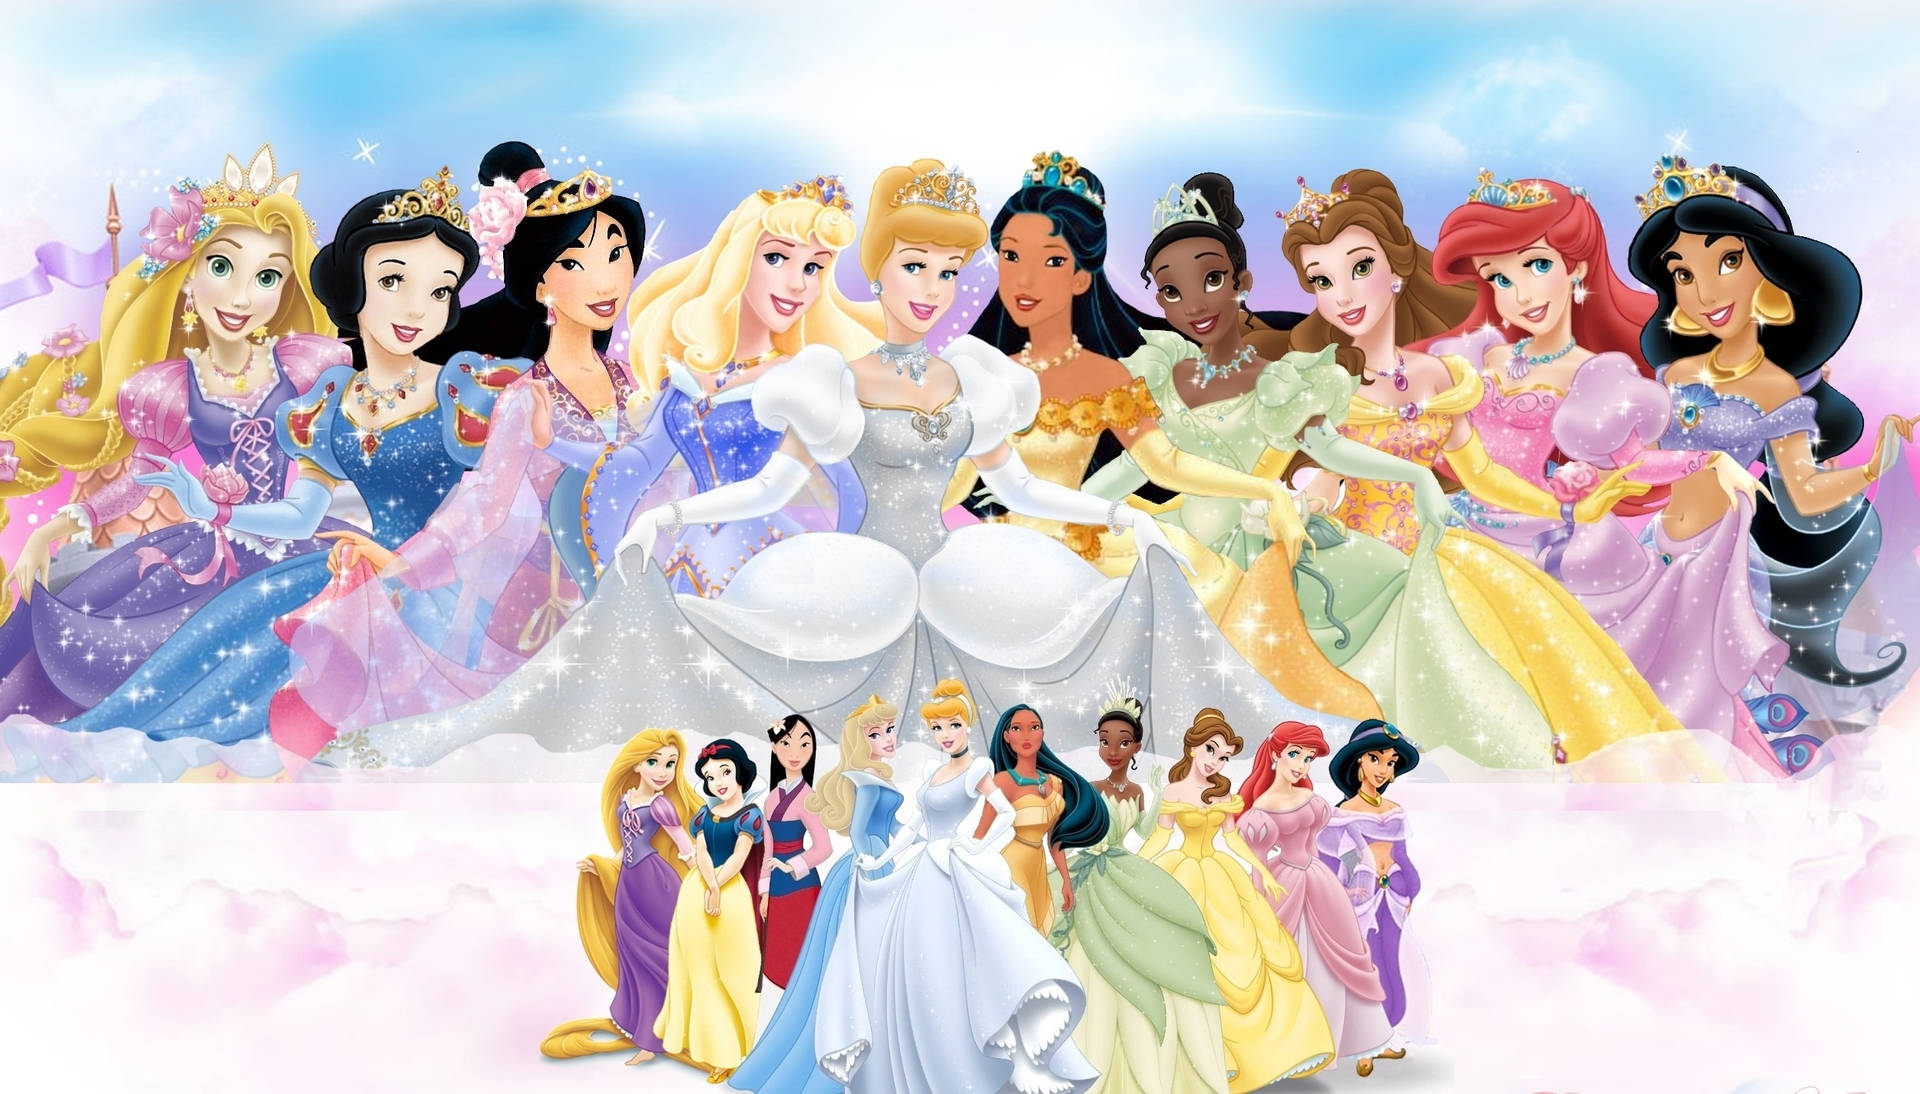 Disney Princesses and Heroines Wallpaper by PrincessKhim18 on DeviantArt